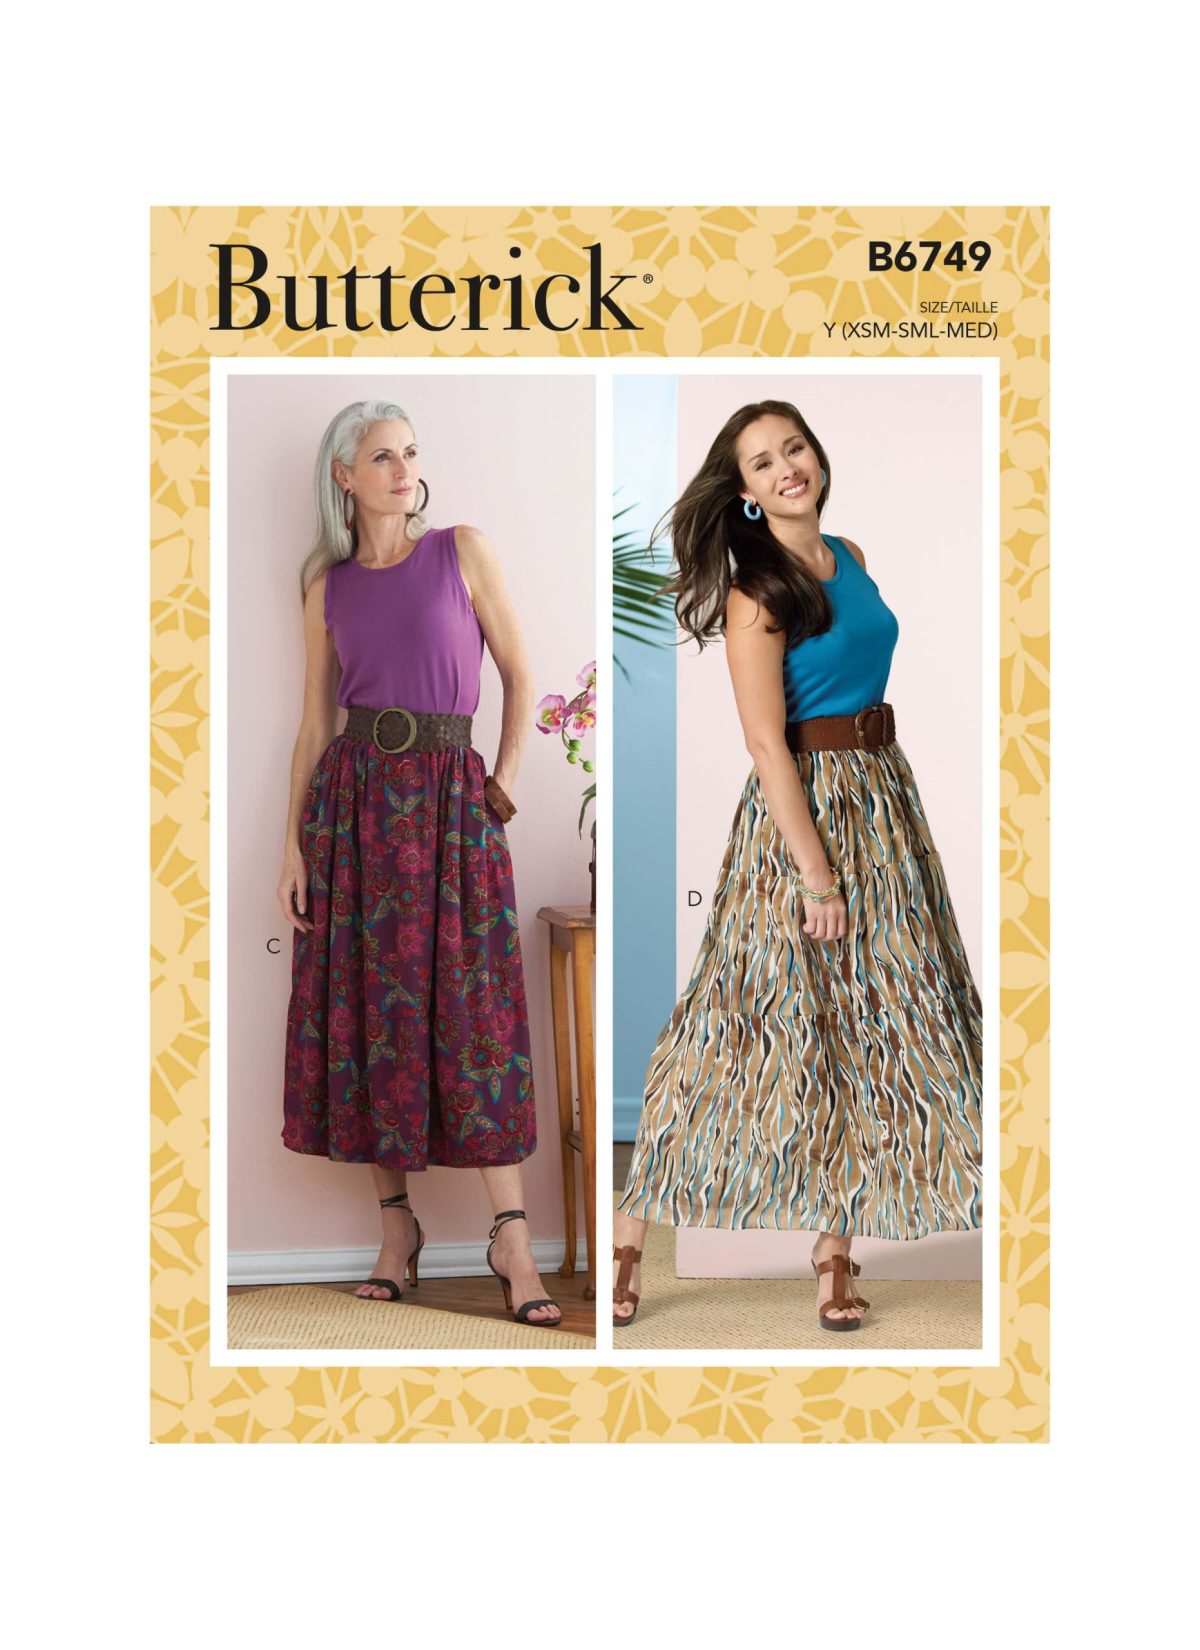 Butterick Sewing Pattern B6749 Misses' Gathered-Waist Skirts